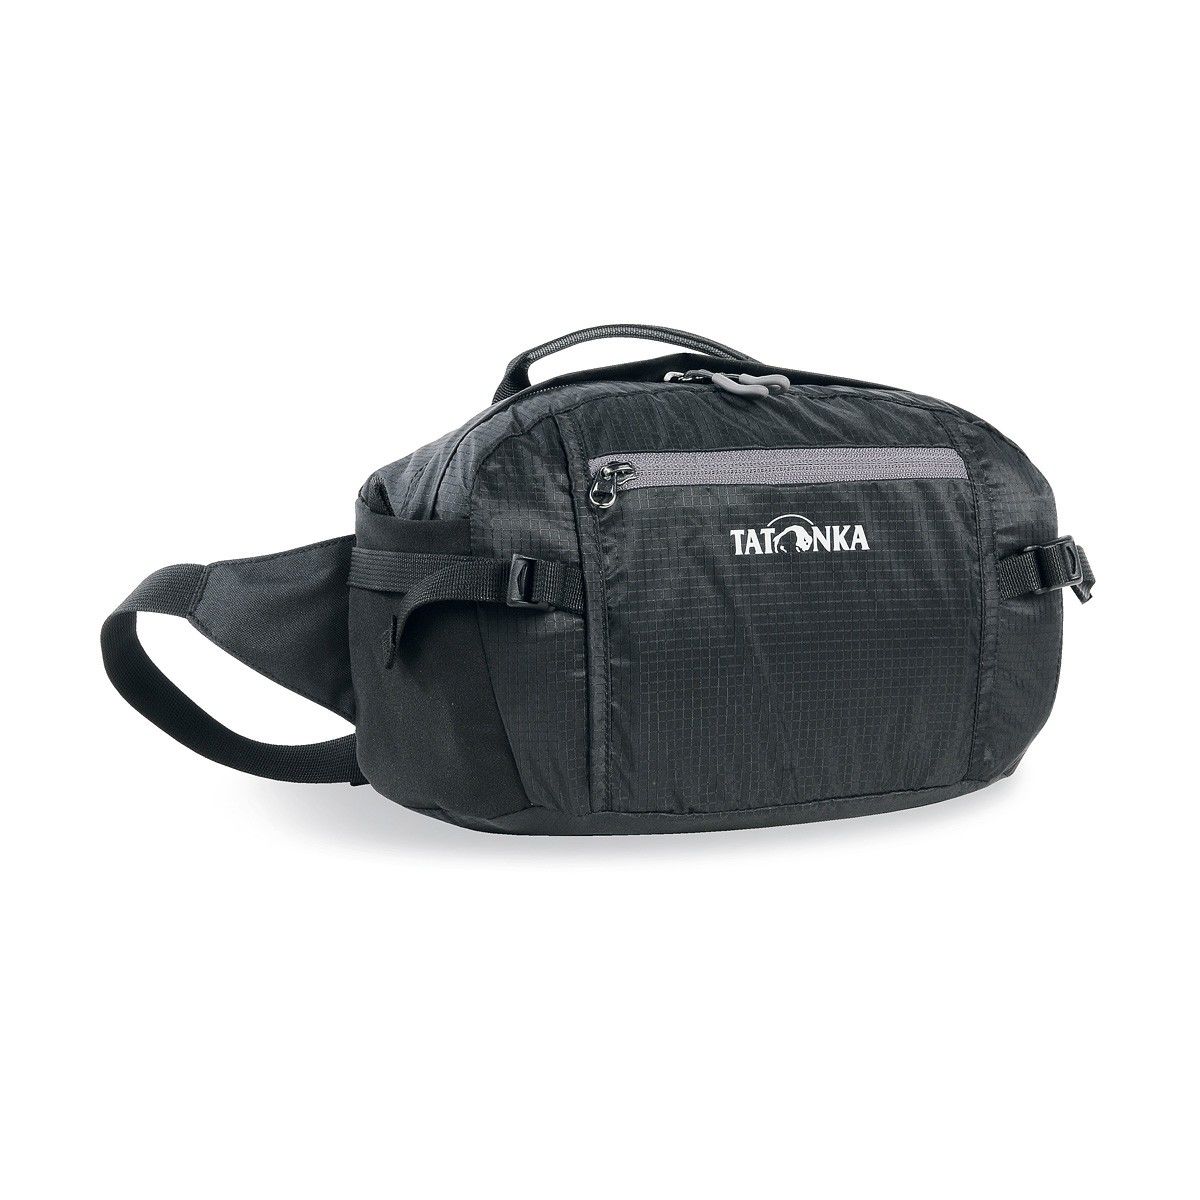 Tatonka HIP Bag Schwarz- Grtel- und Hfttaschen- Grsse 3l - Farbe Black unter Tatonka